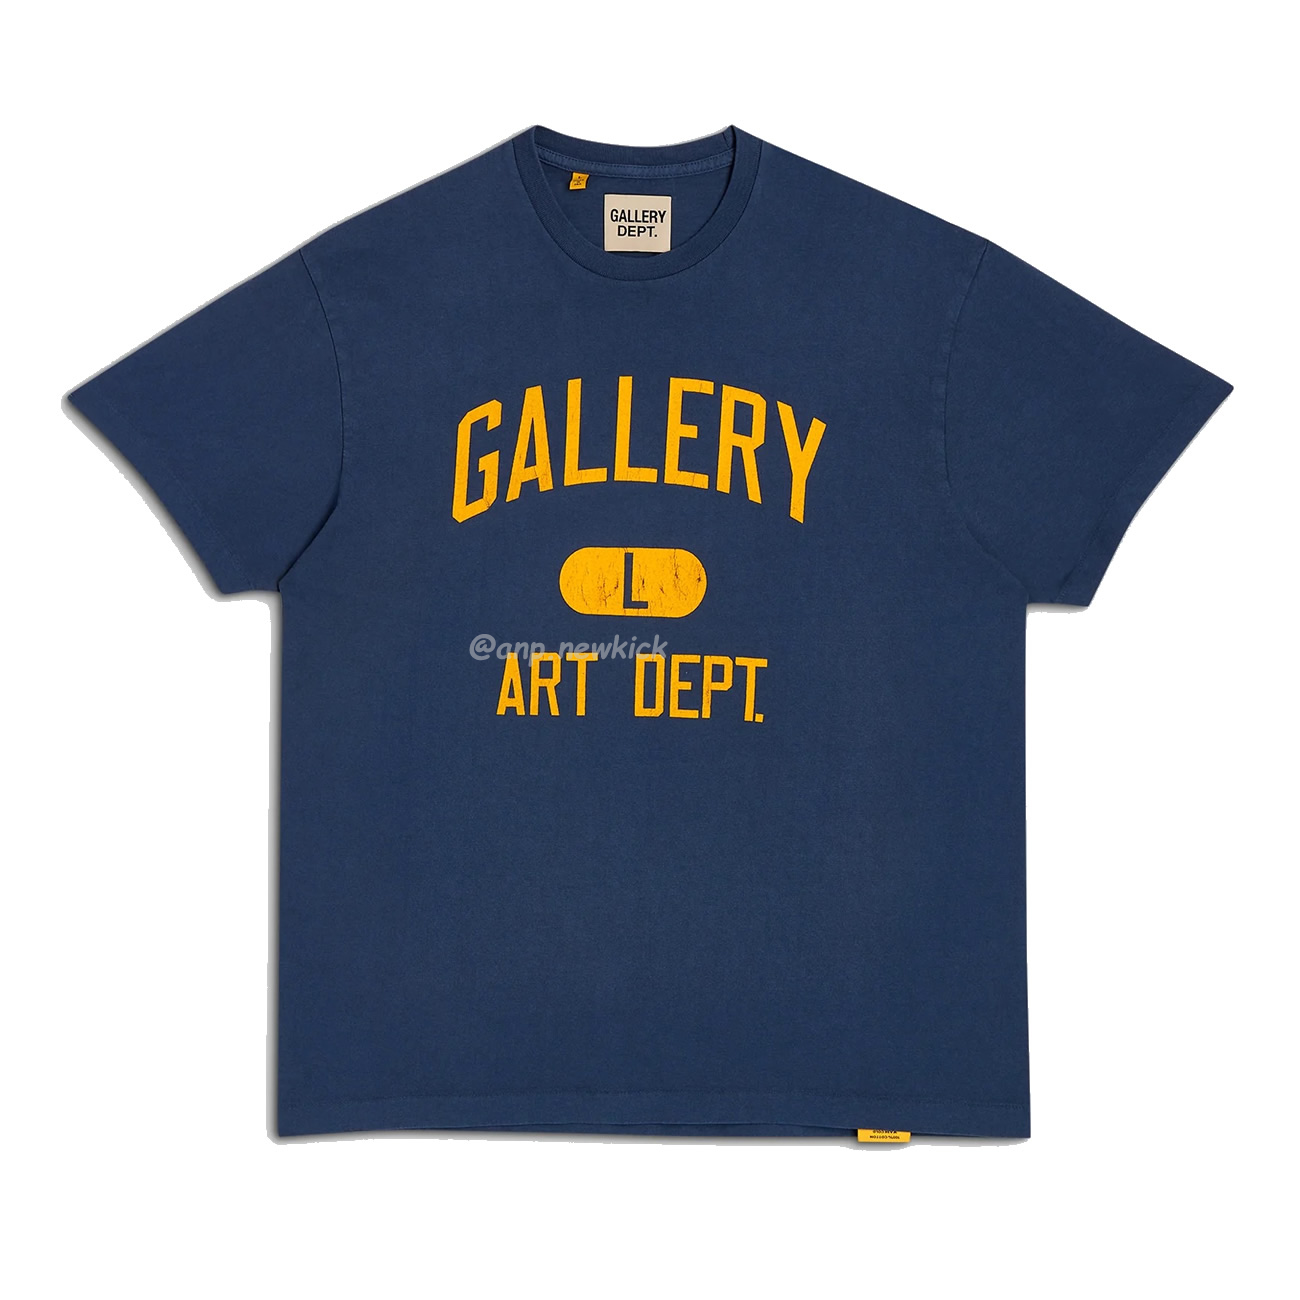 Gallery Dept Logo Printed Cotton T Shirt (6) - newkick.org